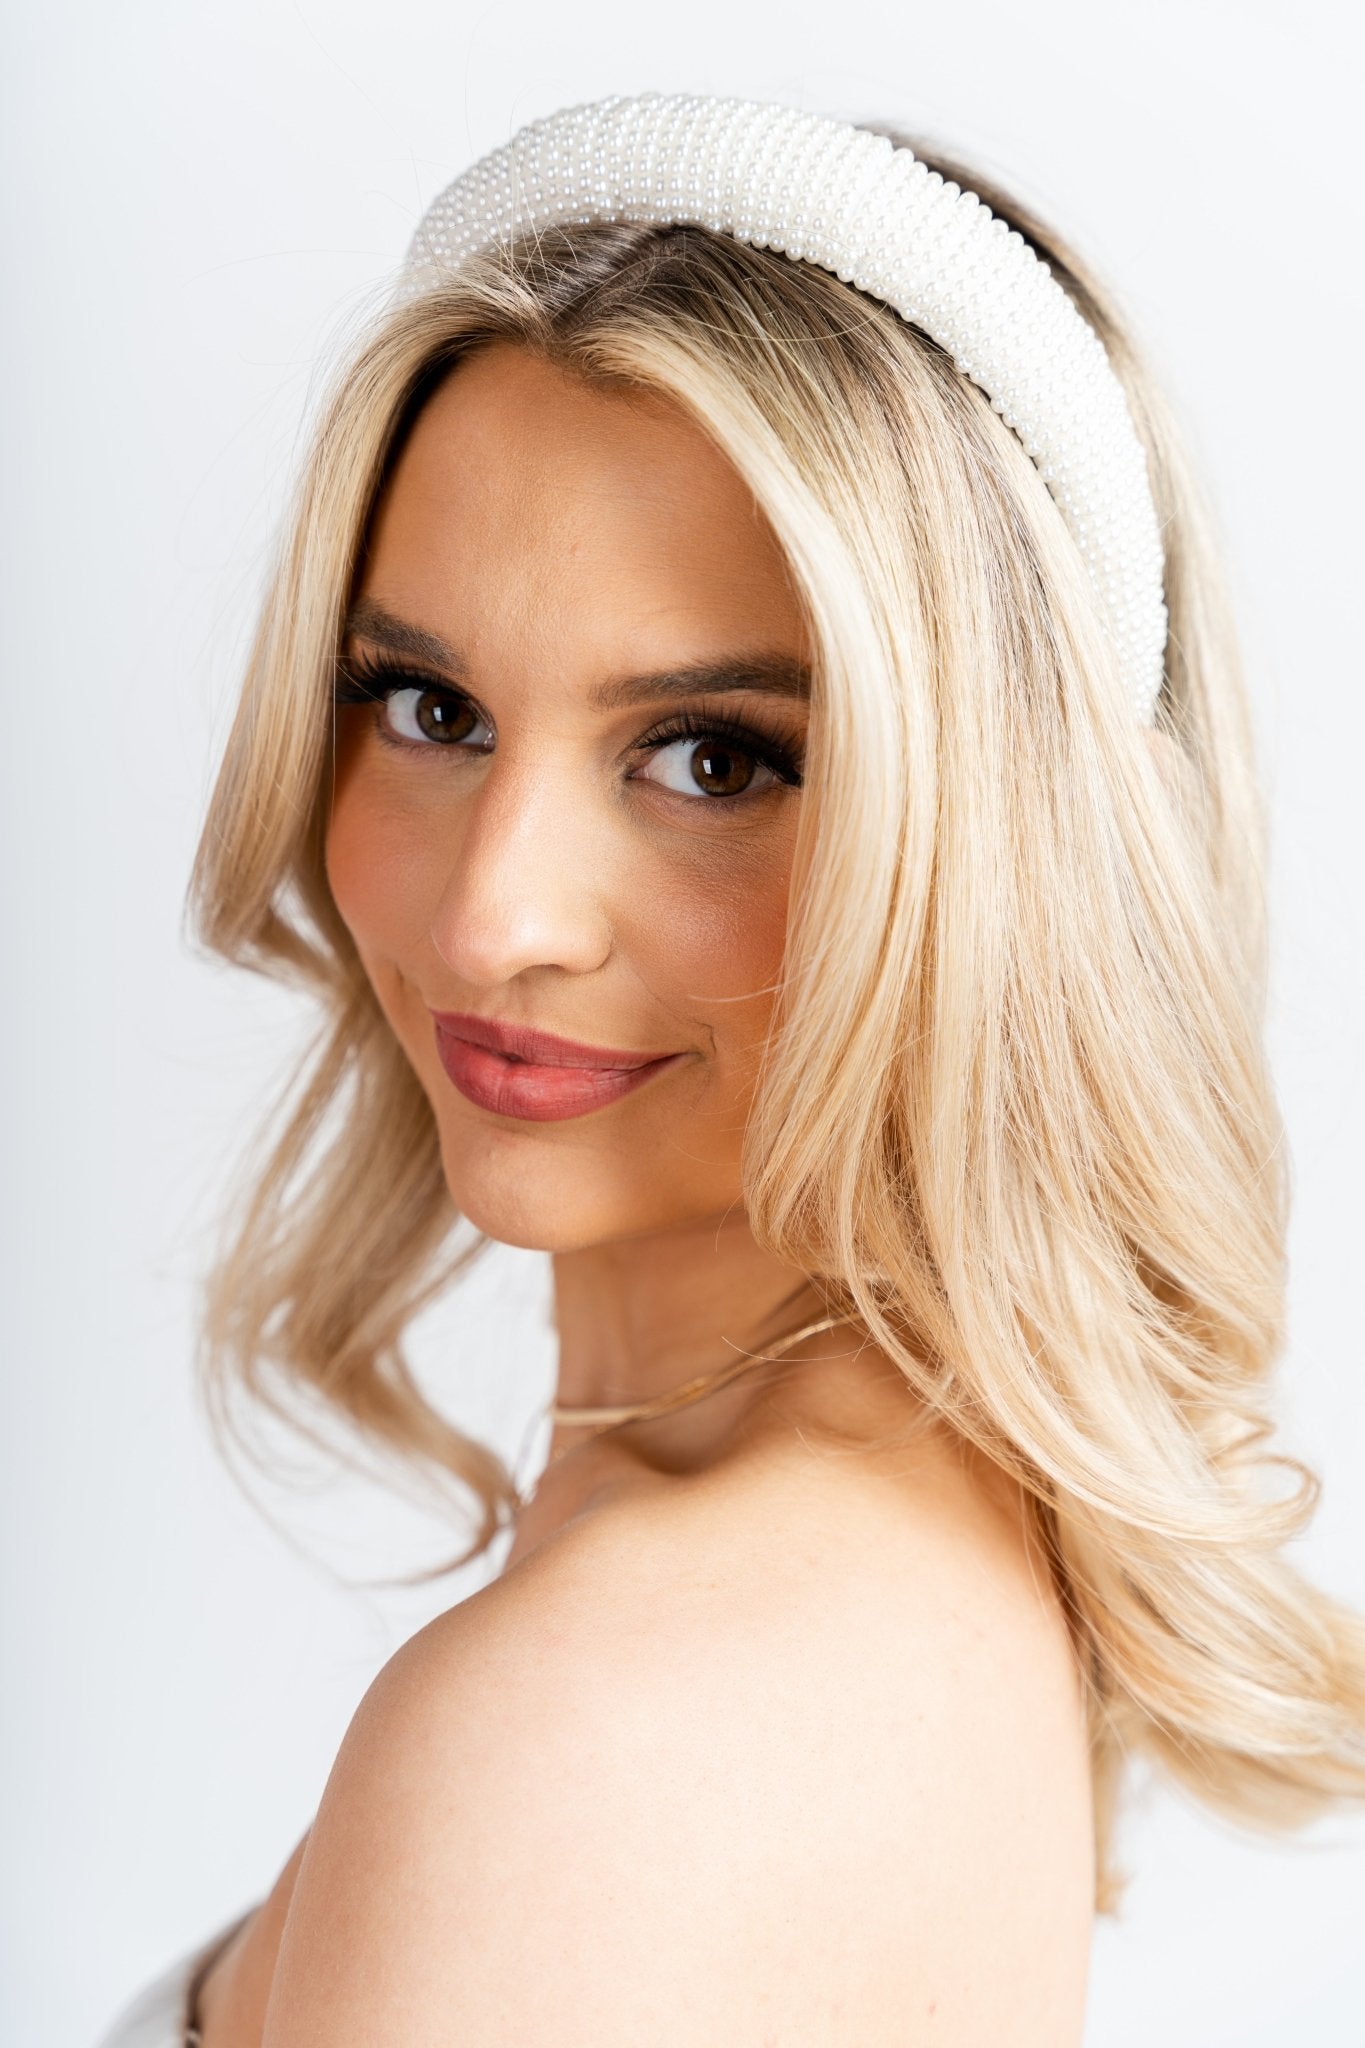 Pearl headband white - Stylish headband -  Cute Bridal Collection at Lush Fashion Lounge Boutique in Oklahoma City